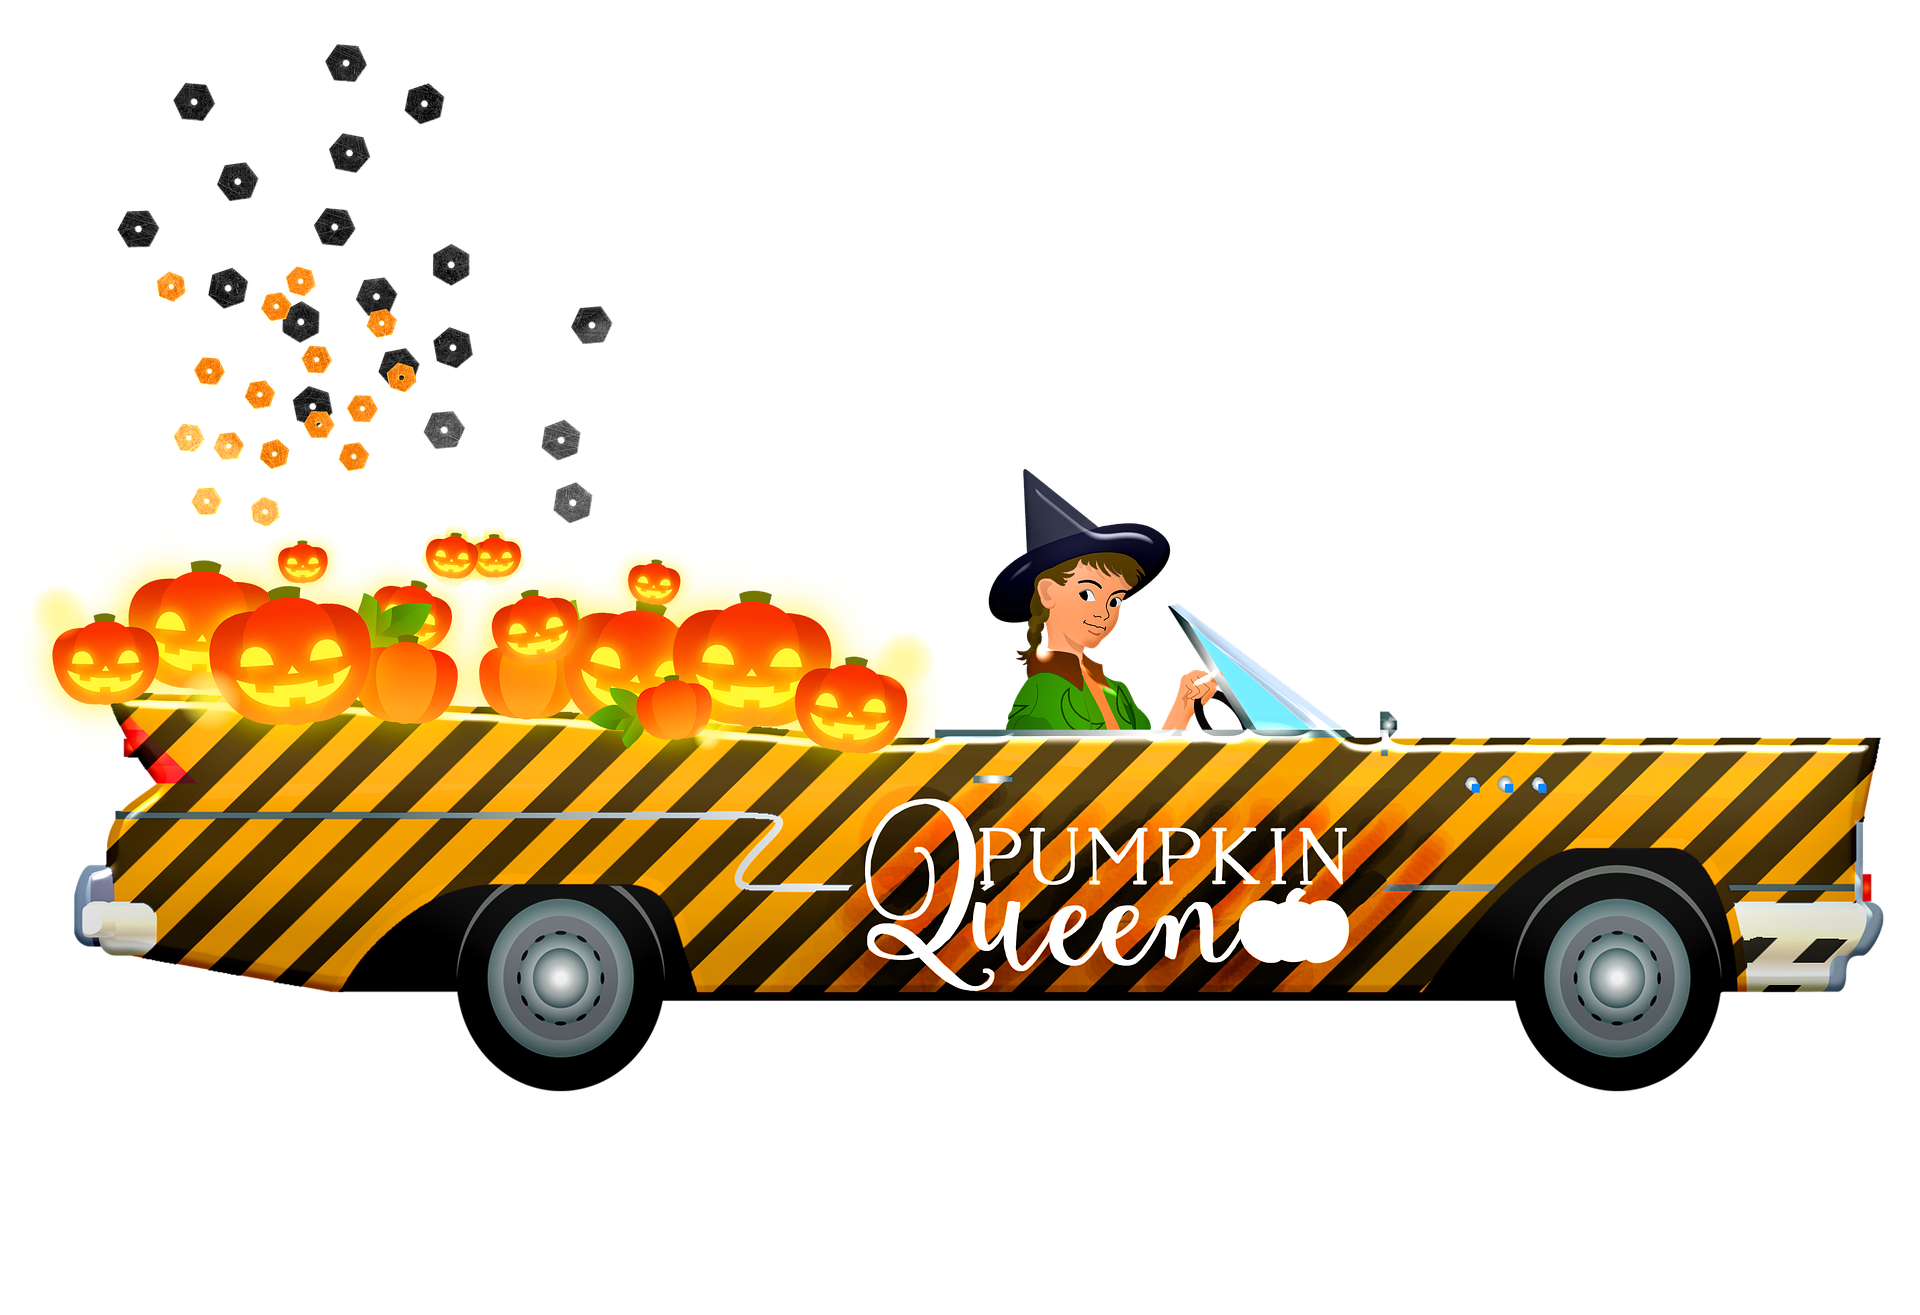 pumpkin queen